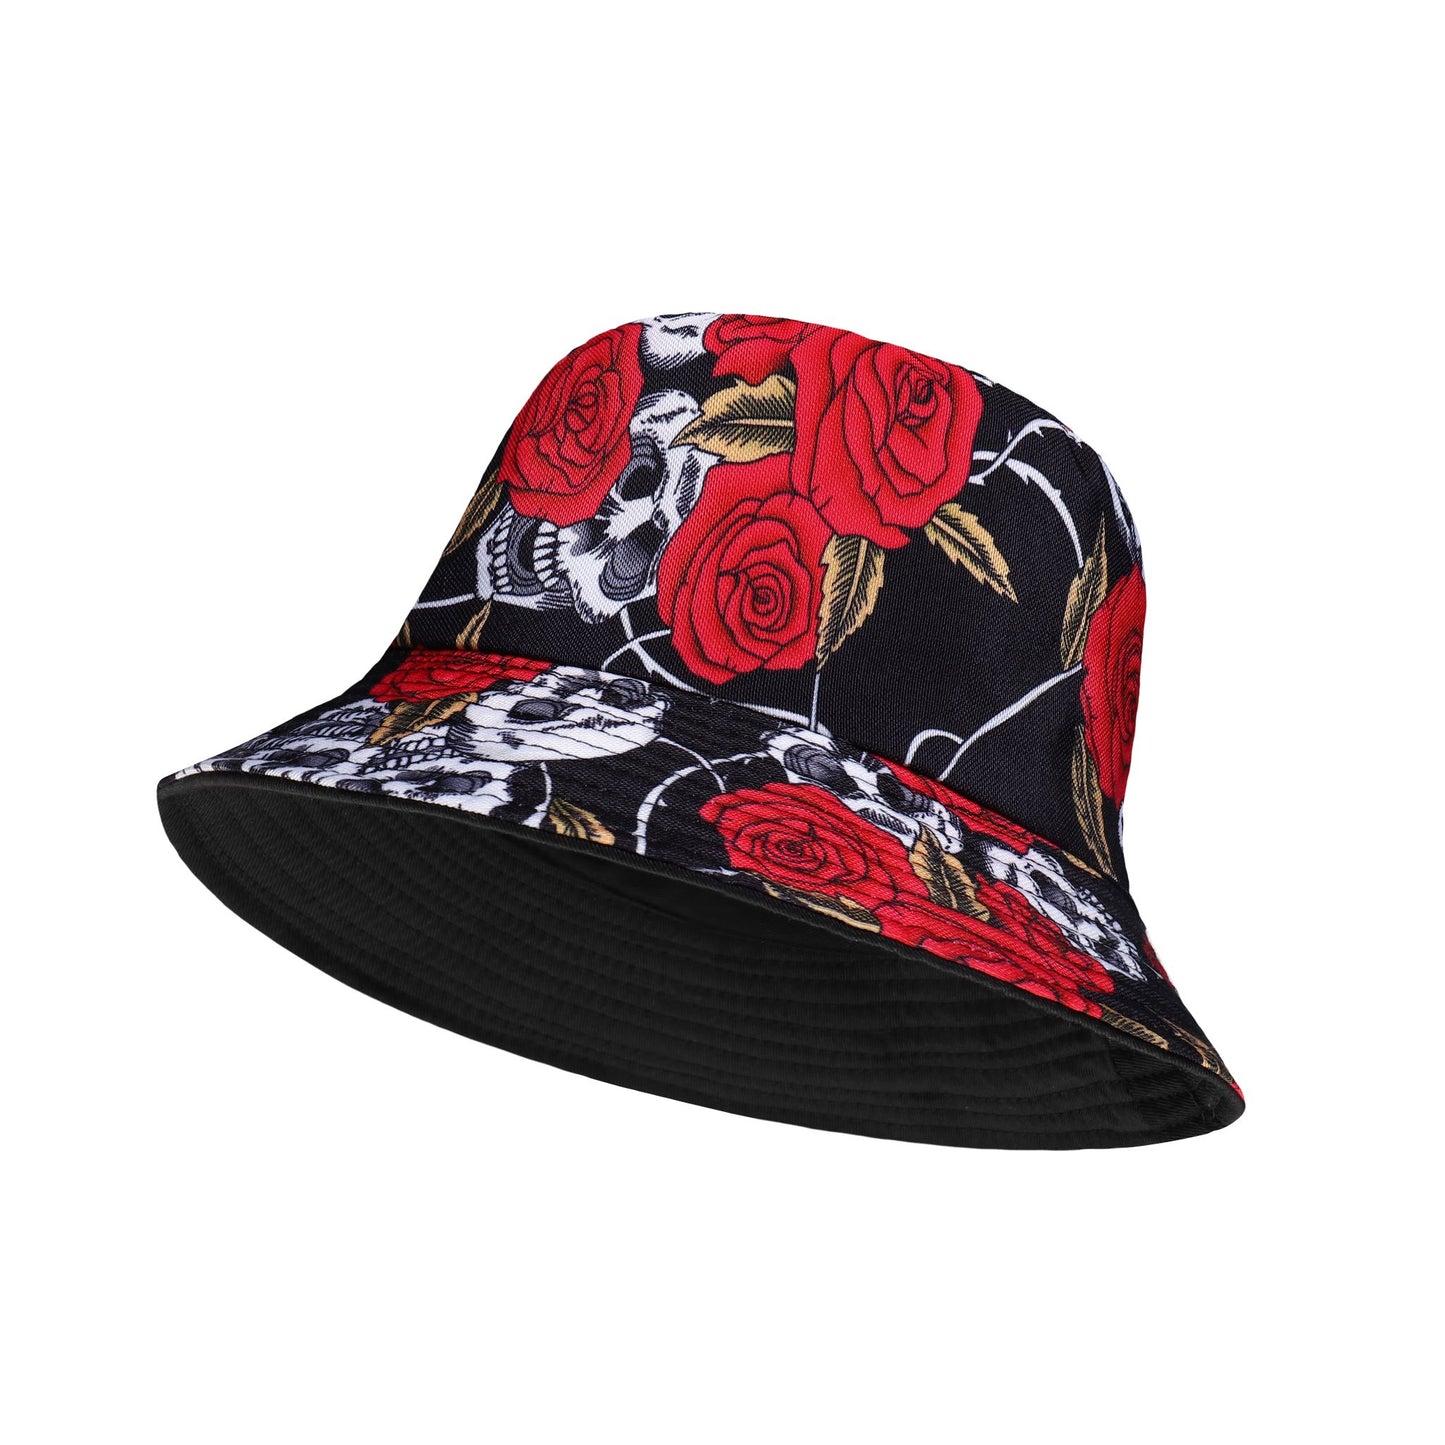 Bucket hat 100% cotton with reversible design, skulls & roses festival hat